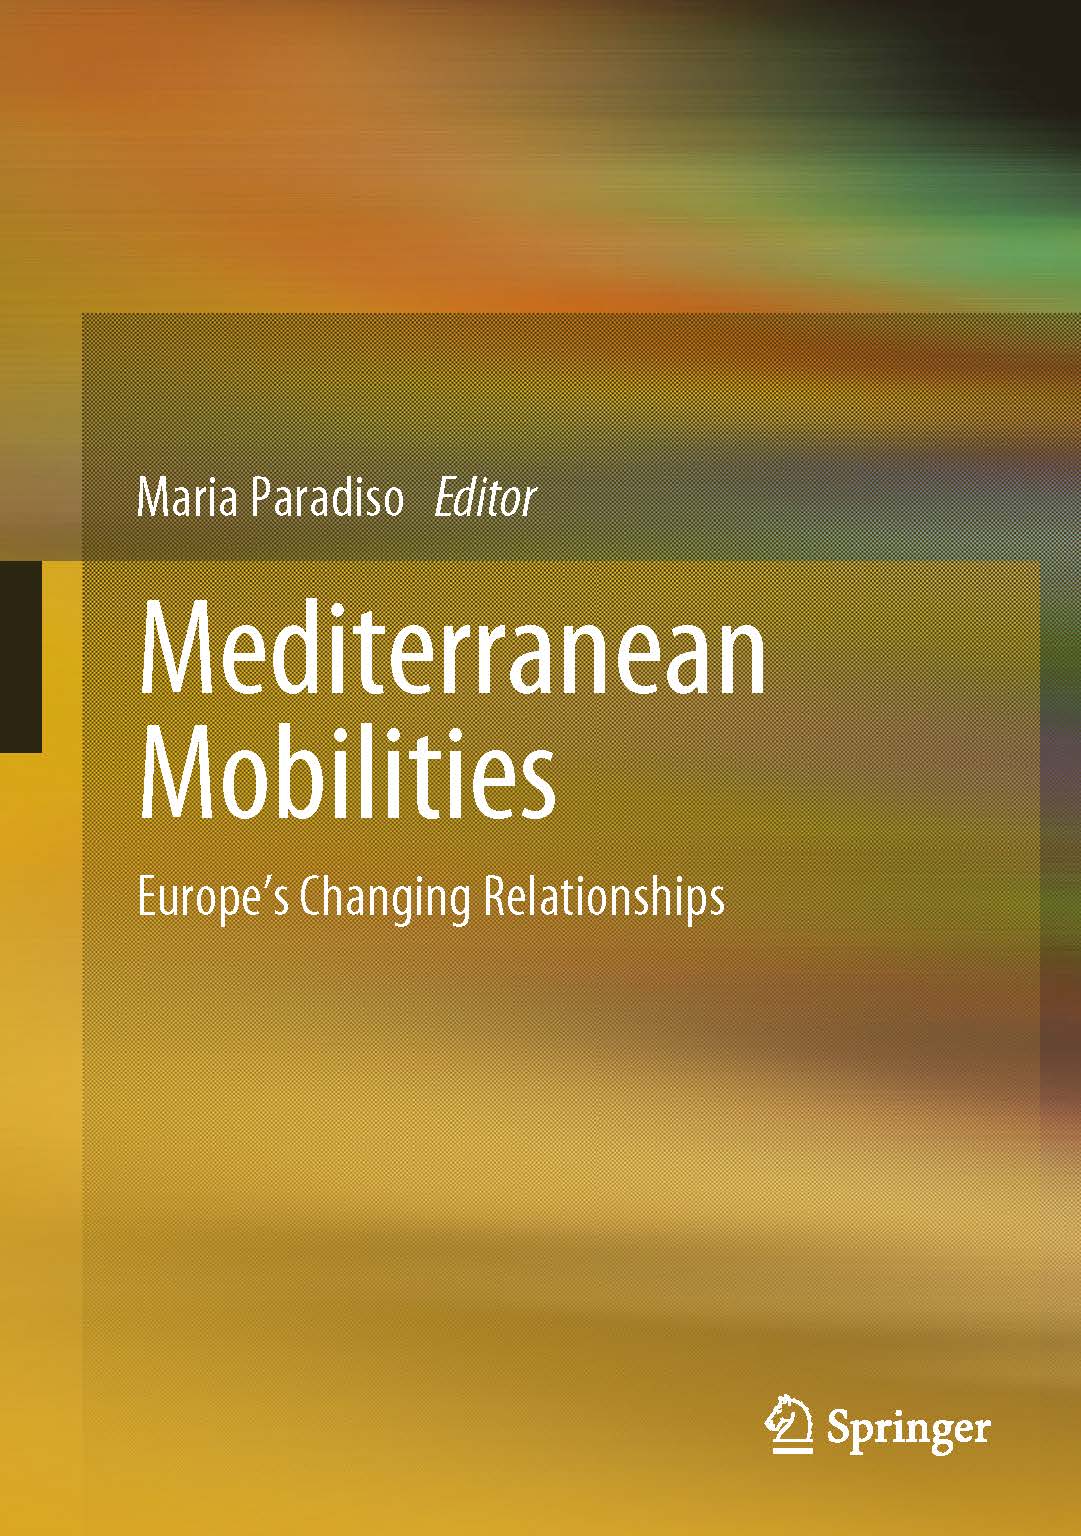 页面提取自－2019_Book_Mediterranean Mobilities.jpg